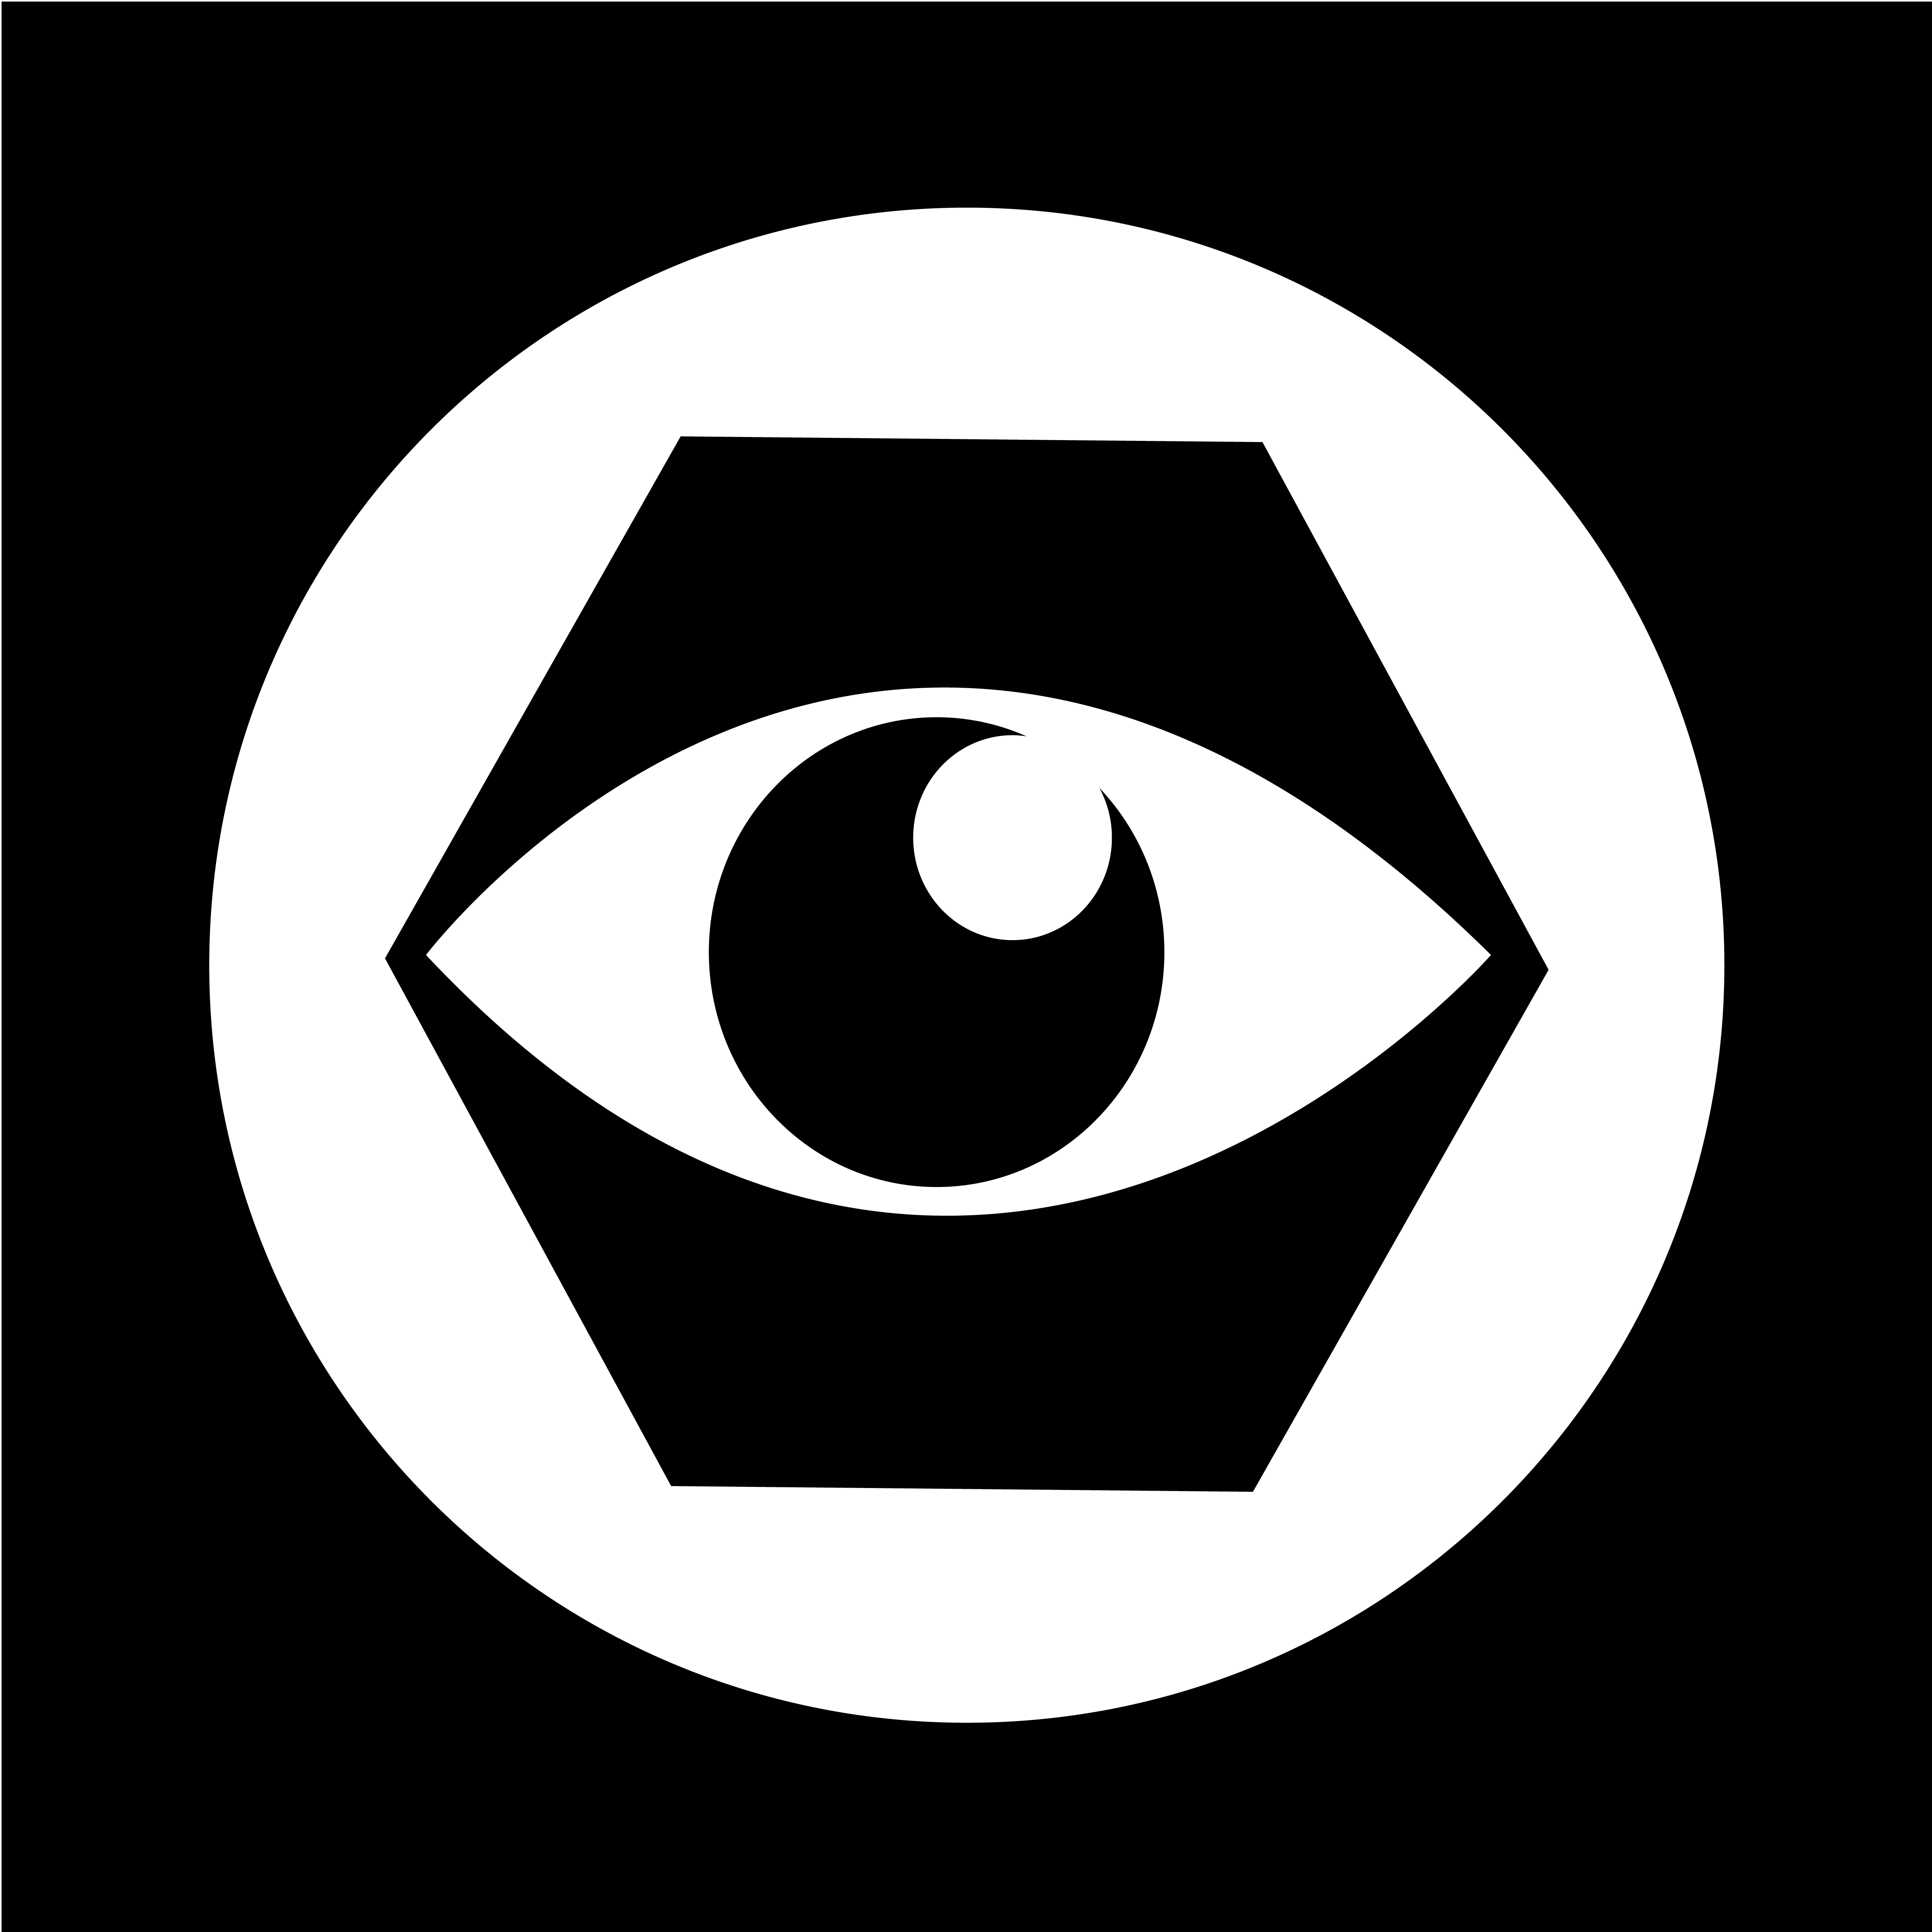 Eye Logo Free Vector Art - (34,326 Free Downloads)